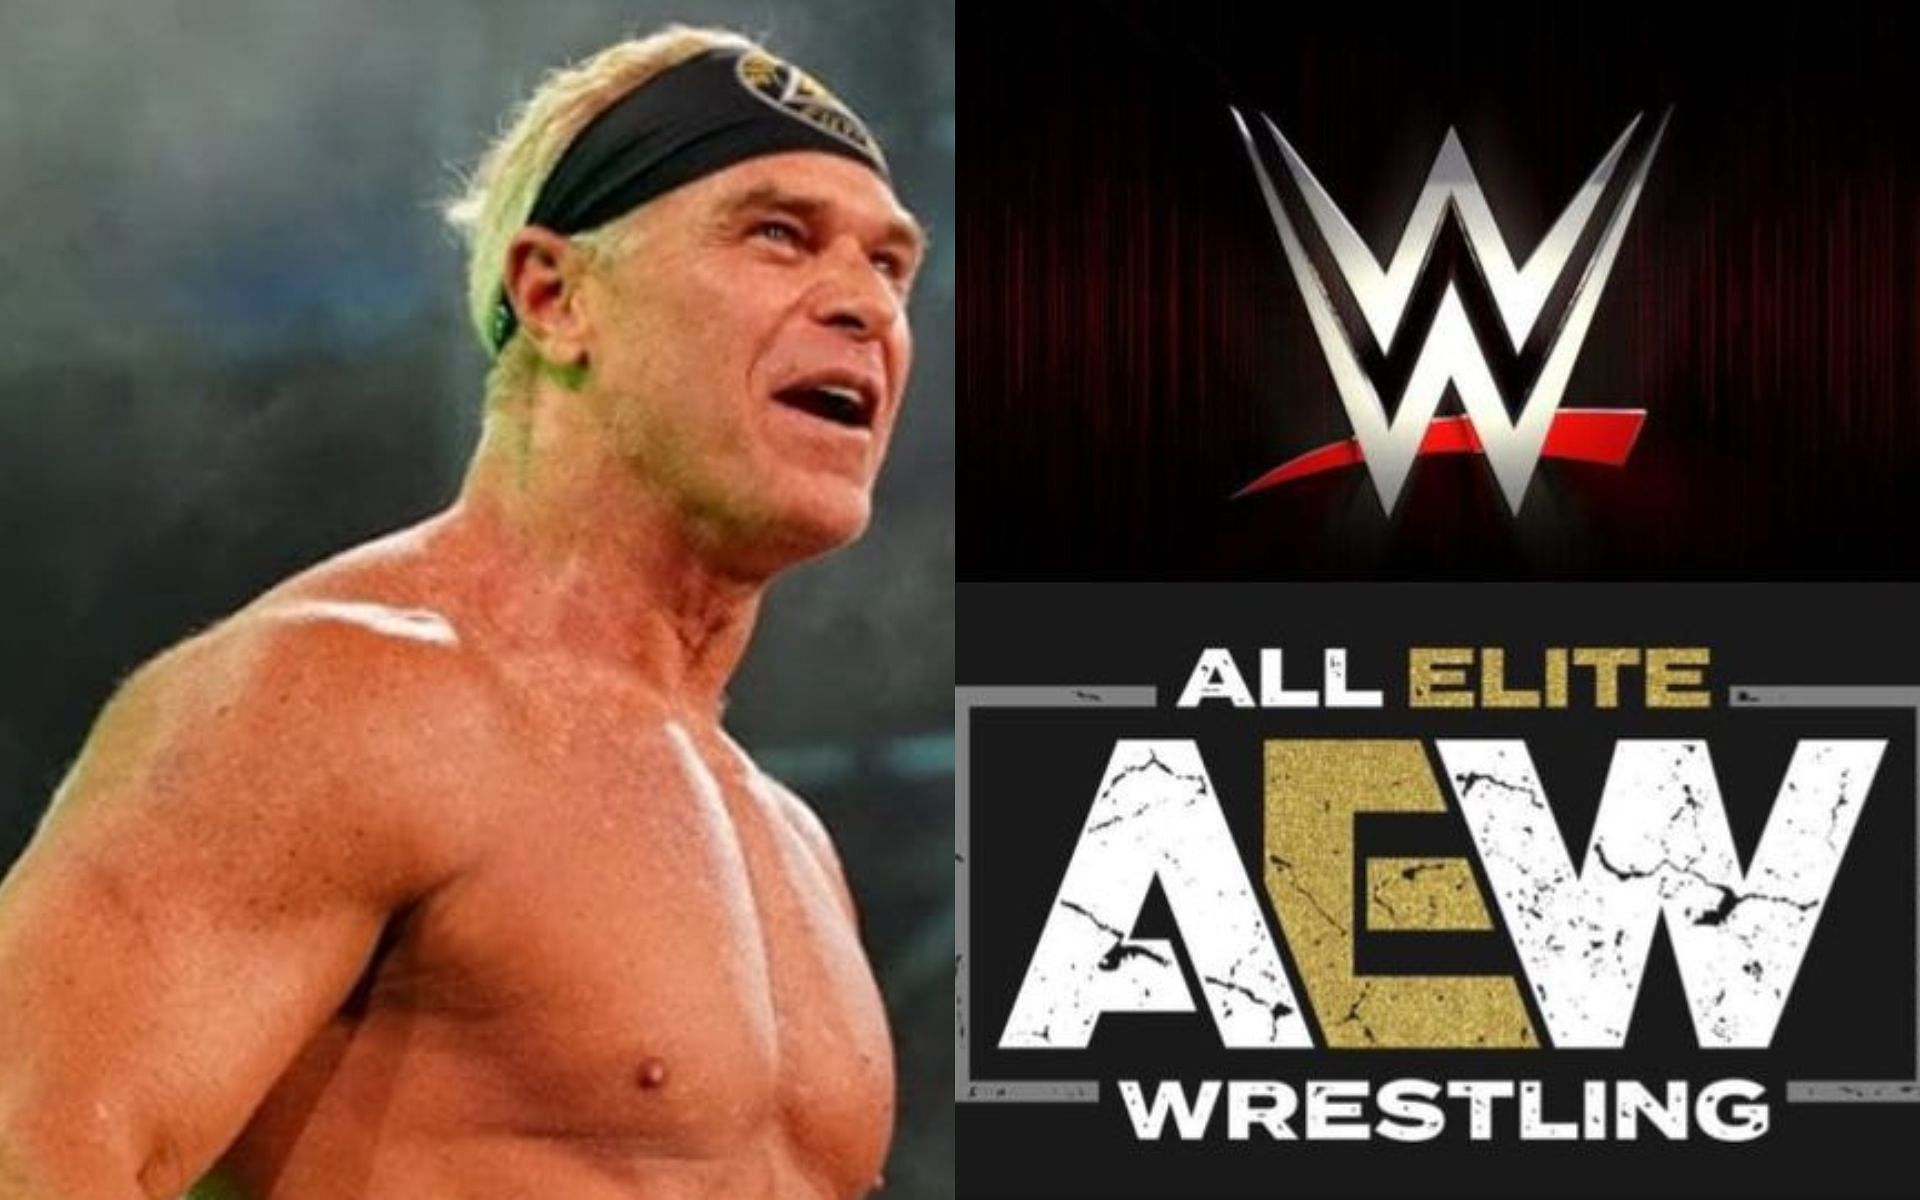 Current AEW star Billy Gunn had a legendary tag team with this WWE legend.